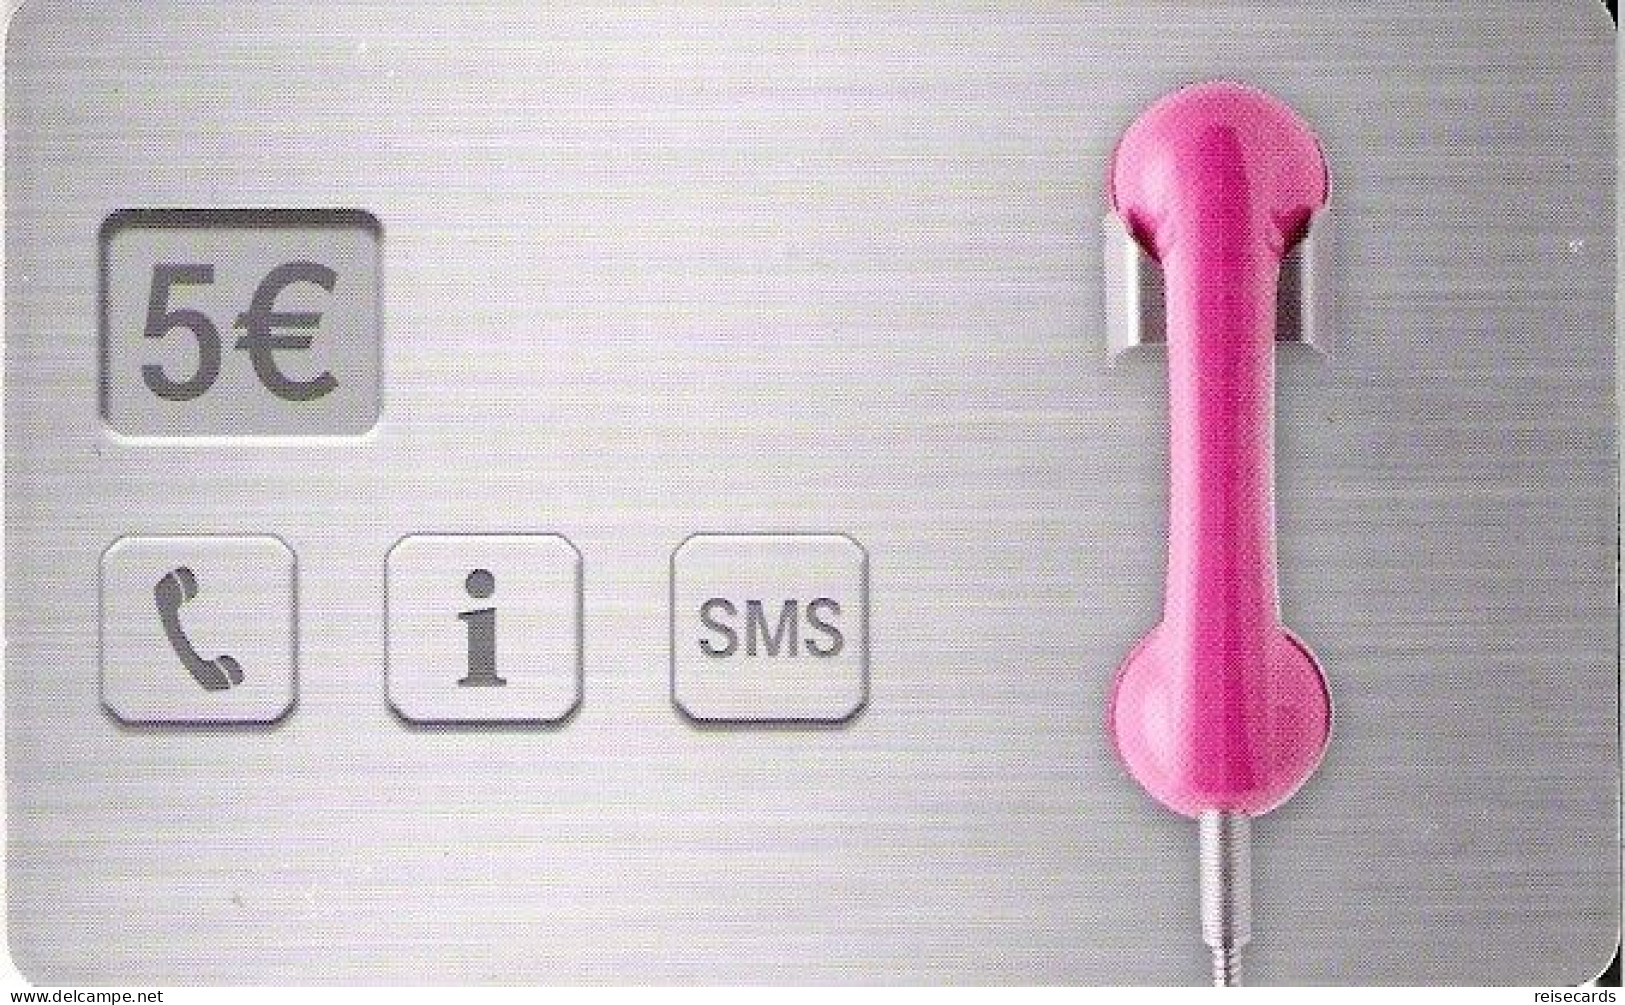 Germany: Telekom PD 01 10.07 Anruf Oder SMS, Bargeldlos - P & PD-Series : D. Telekom Till